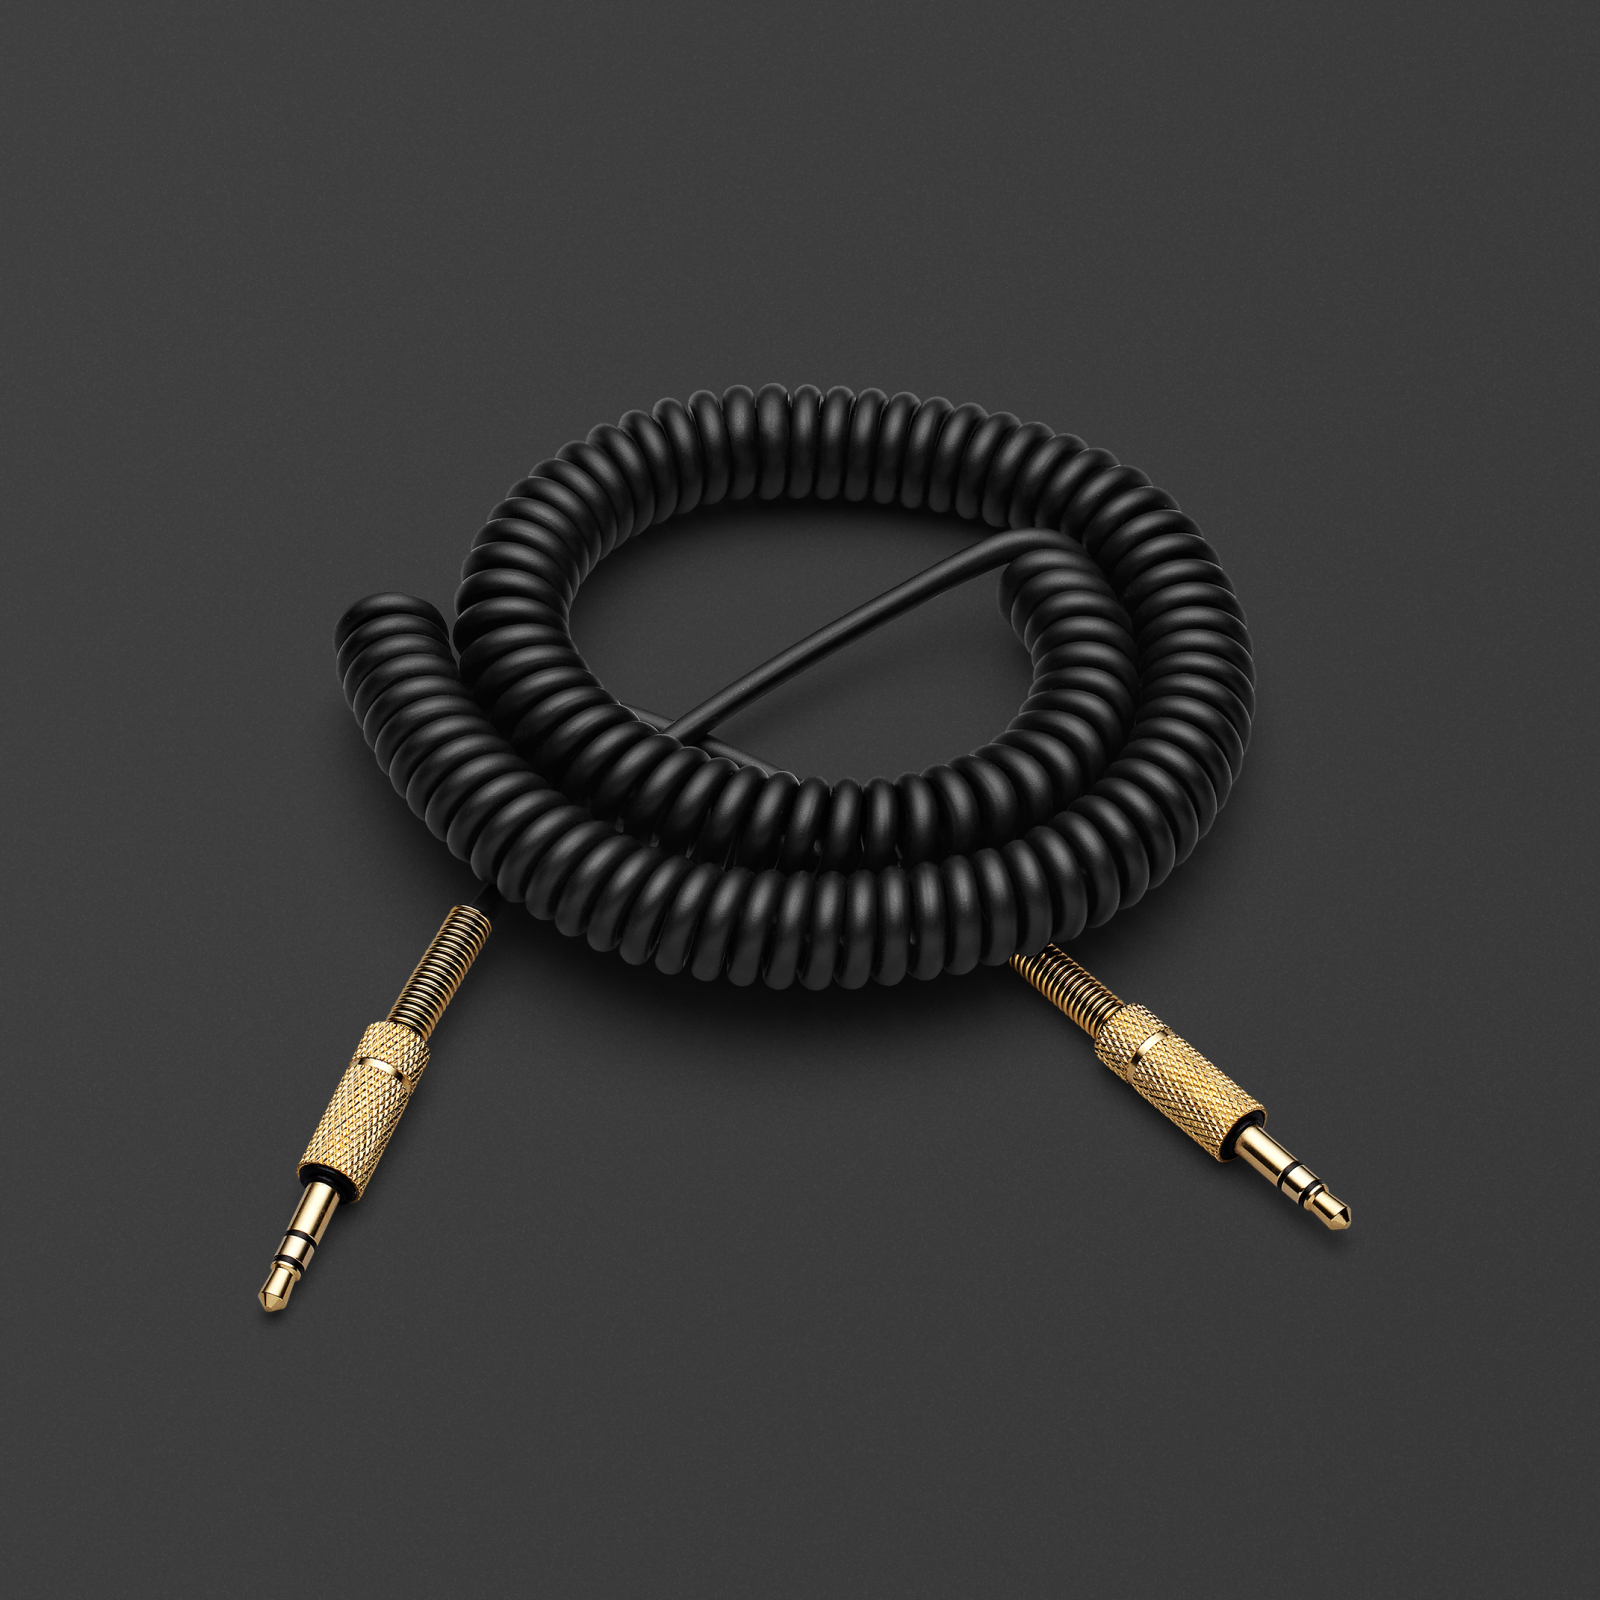 Un cable de audio Marshall negro en espiral.